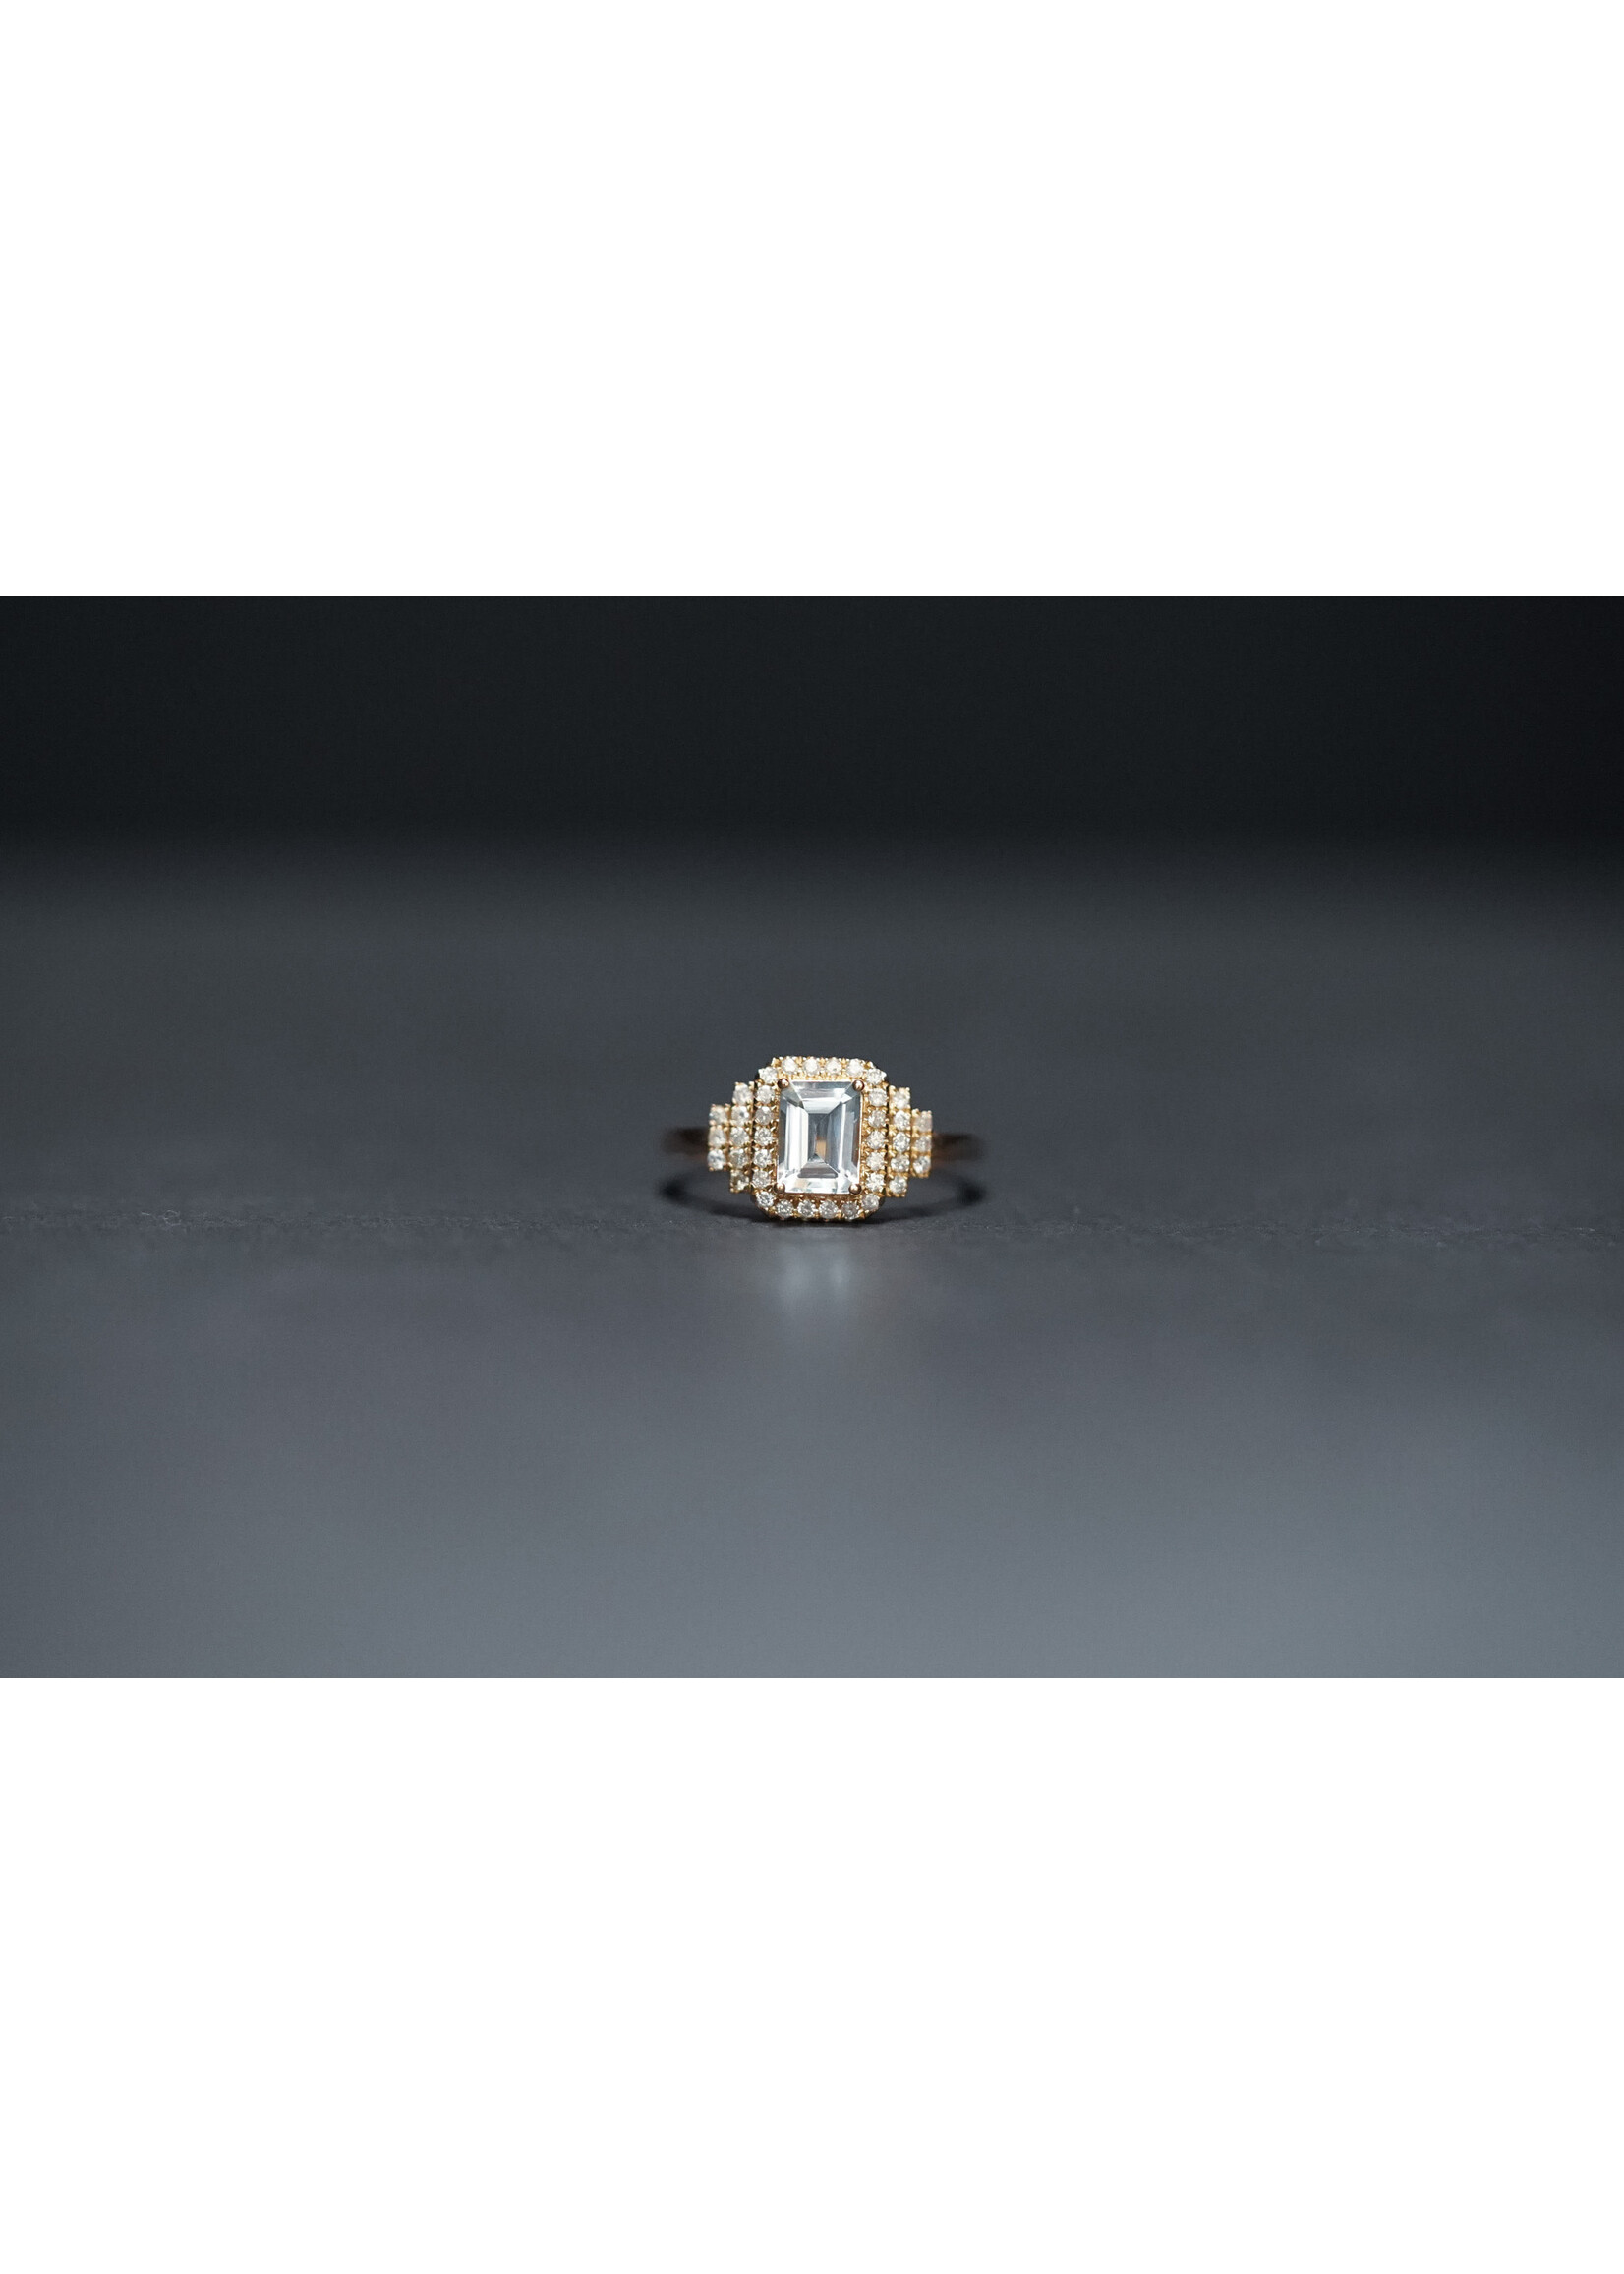 14KY 2.30g 1.20ctw (.90ctr) Aquamarine & Diamond Fashion Ring (size 7)